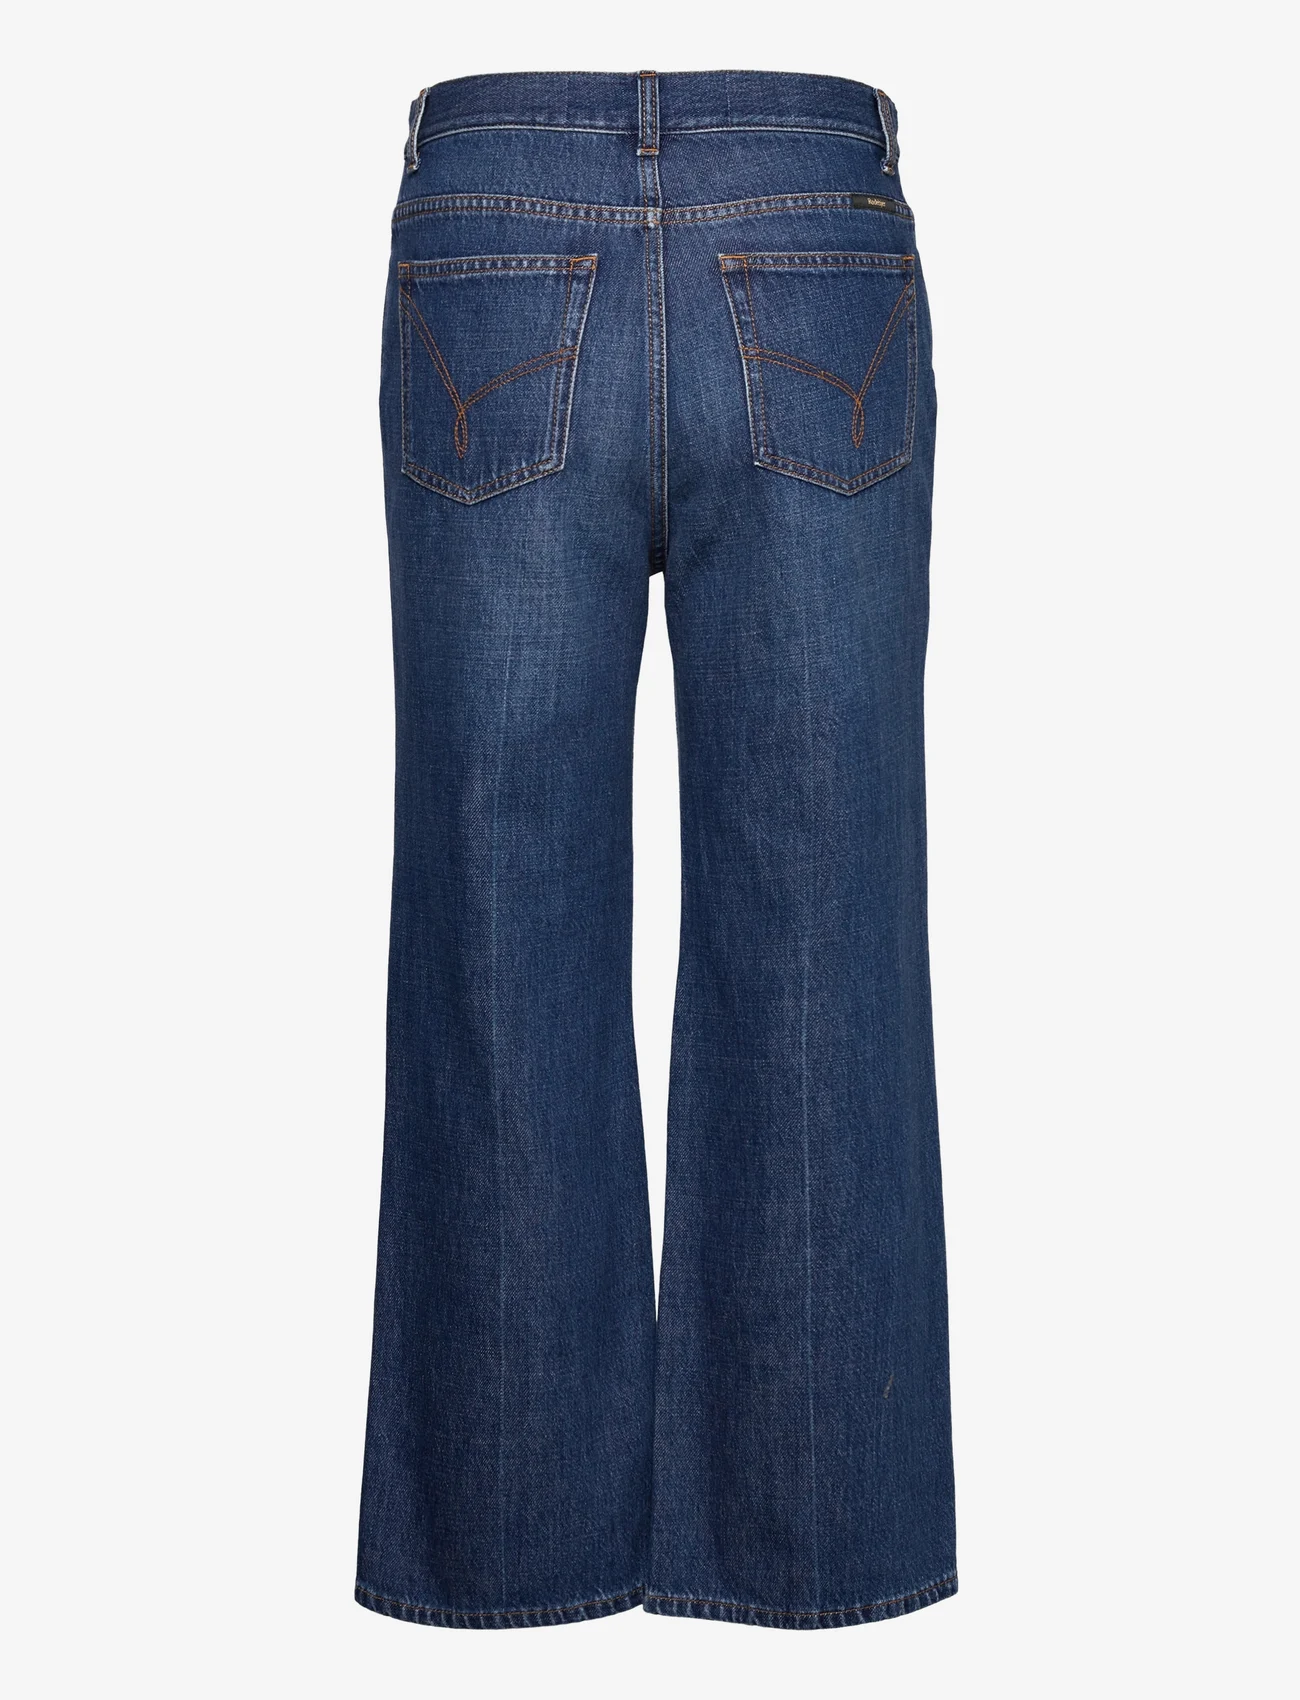 RODEBJER - Rodebjer Mini Culotte - utsvängda jeans - indigo - 1